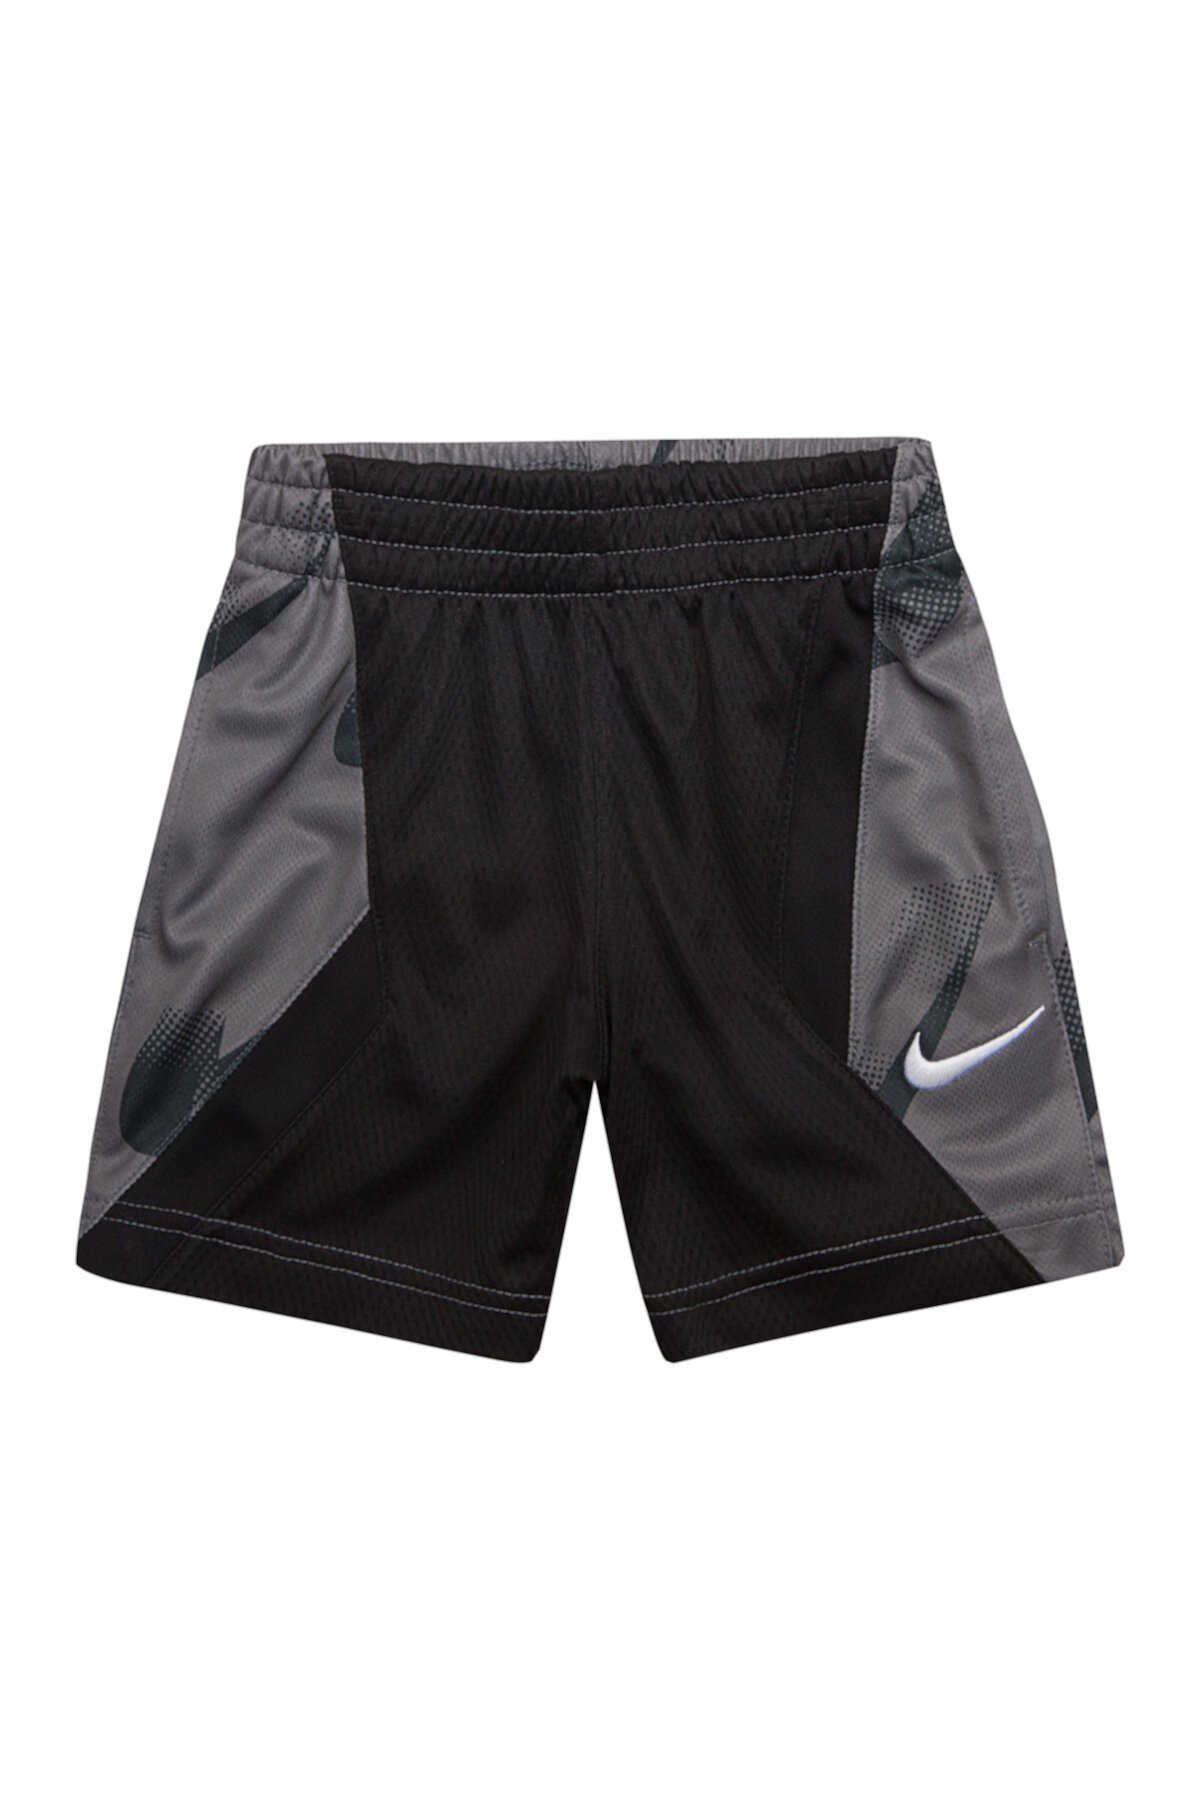 Avalanche Shorts (Toddler Boys) Nike